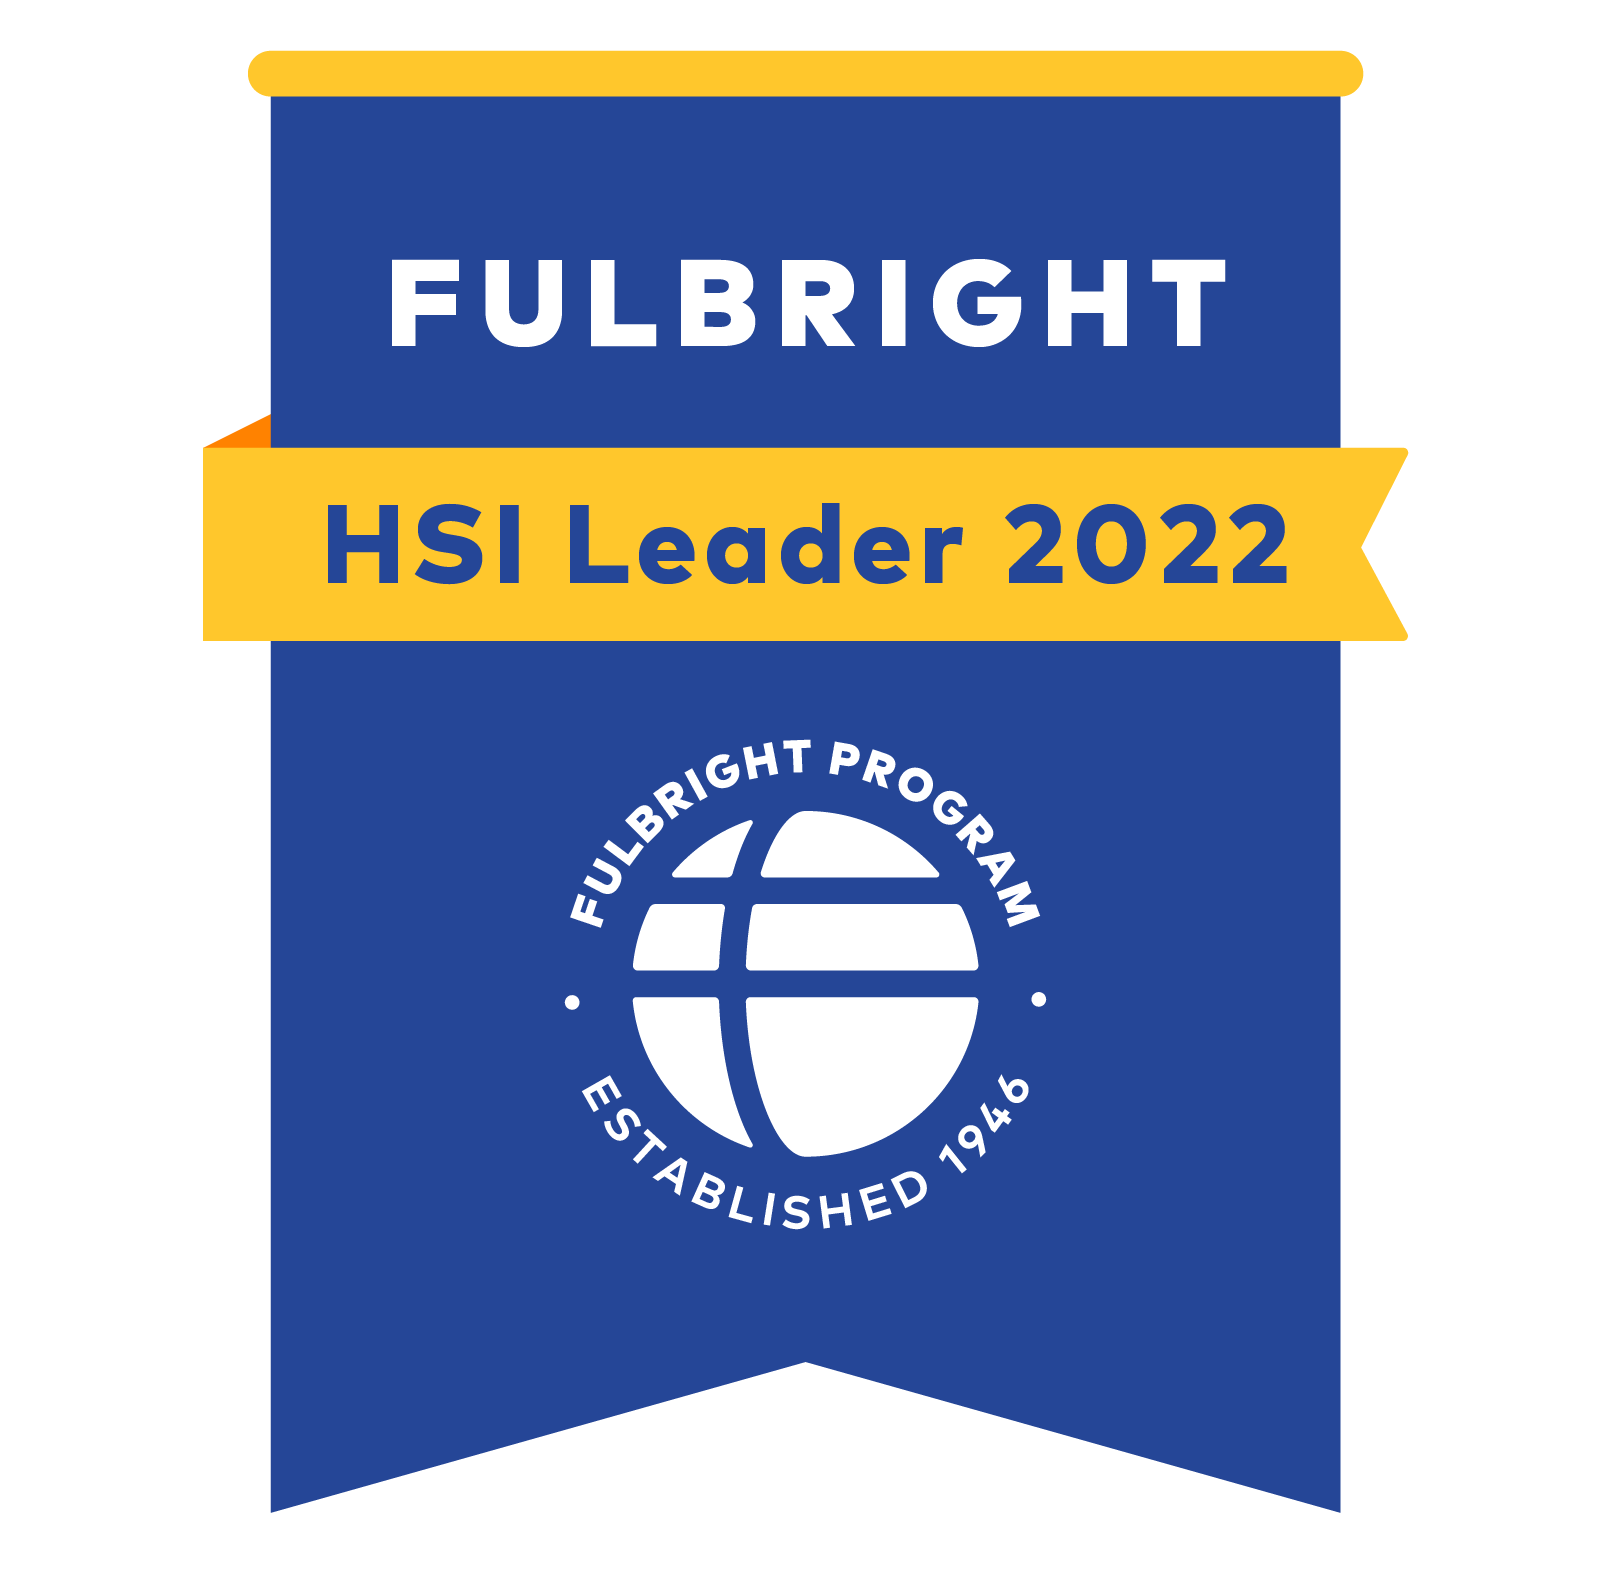 Fulbright HSI Leader badge